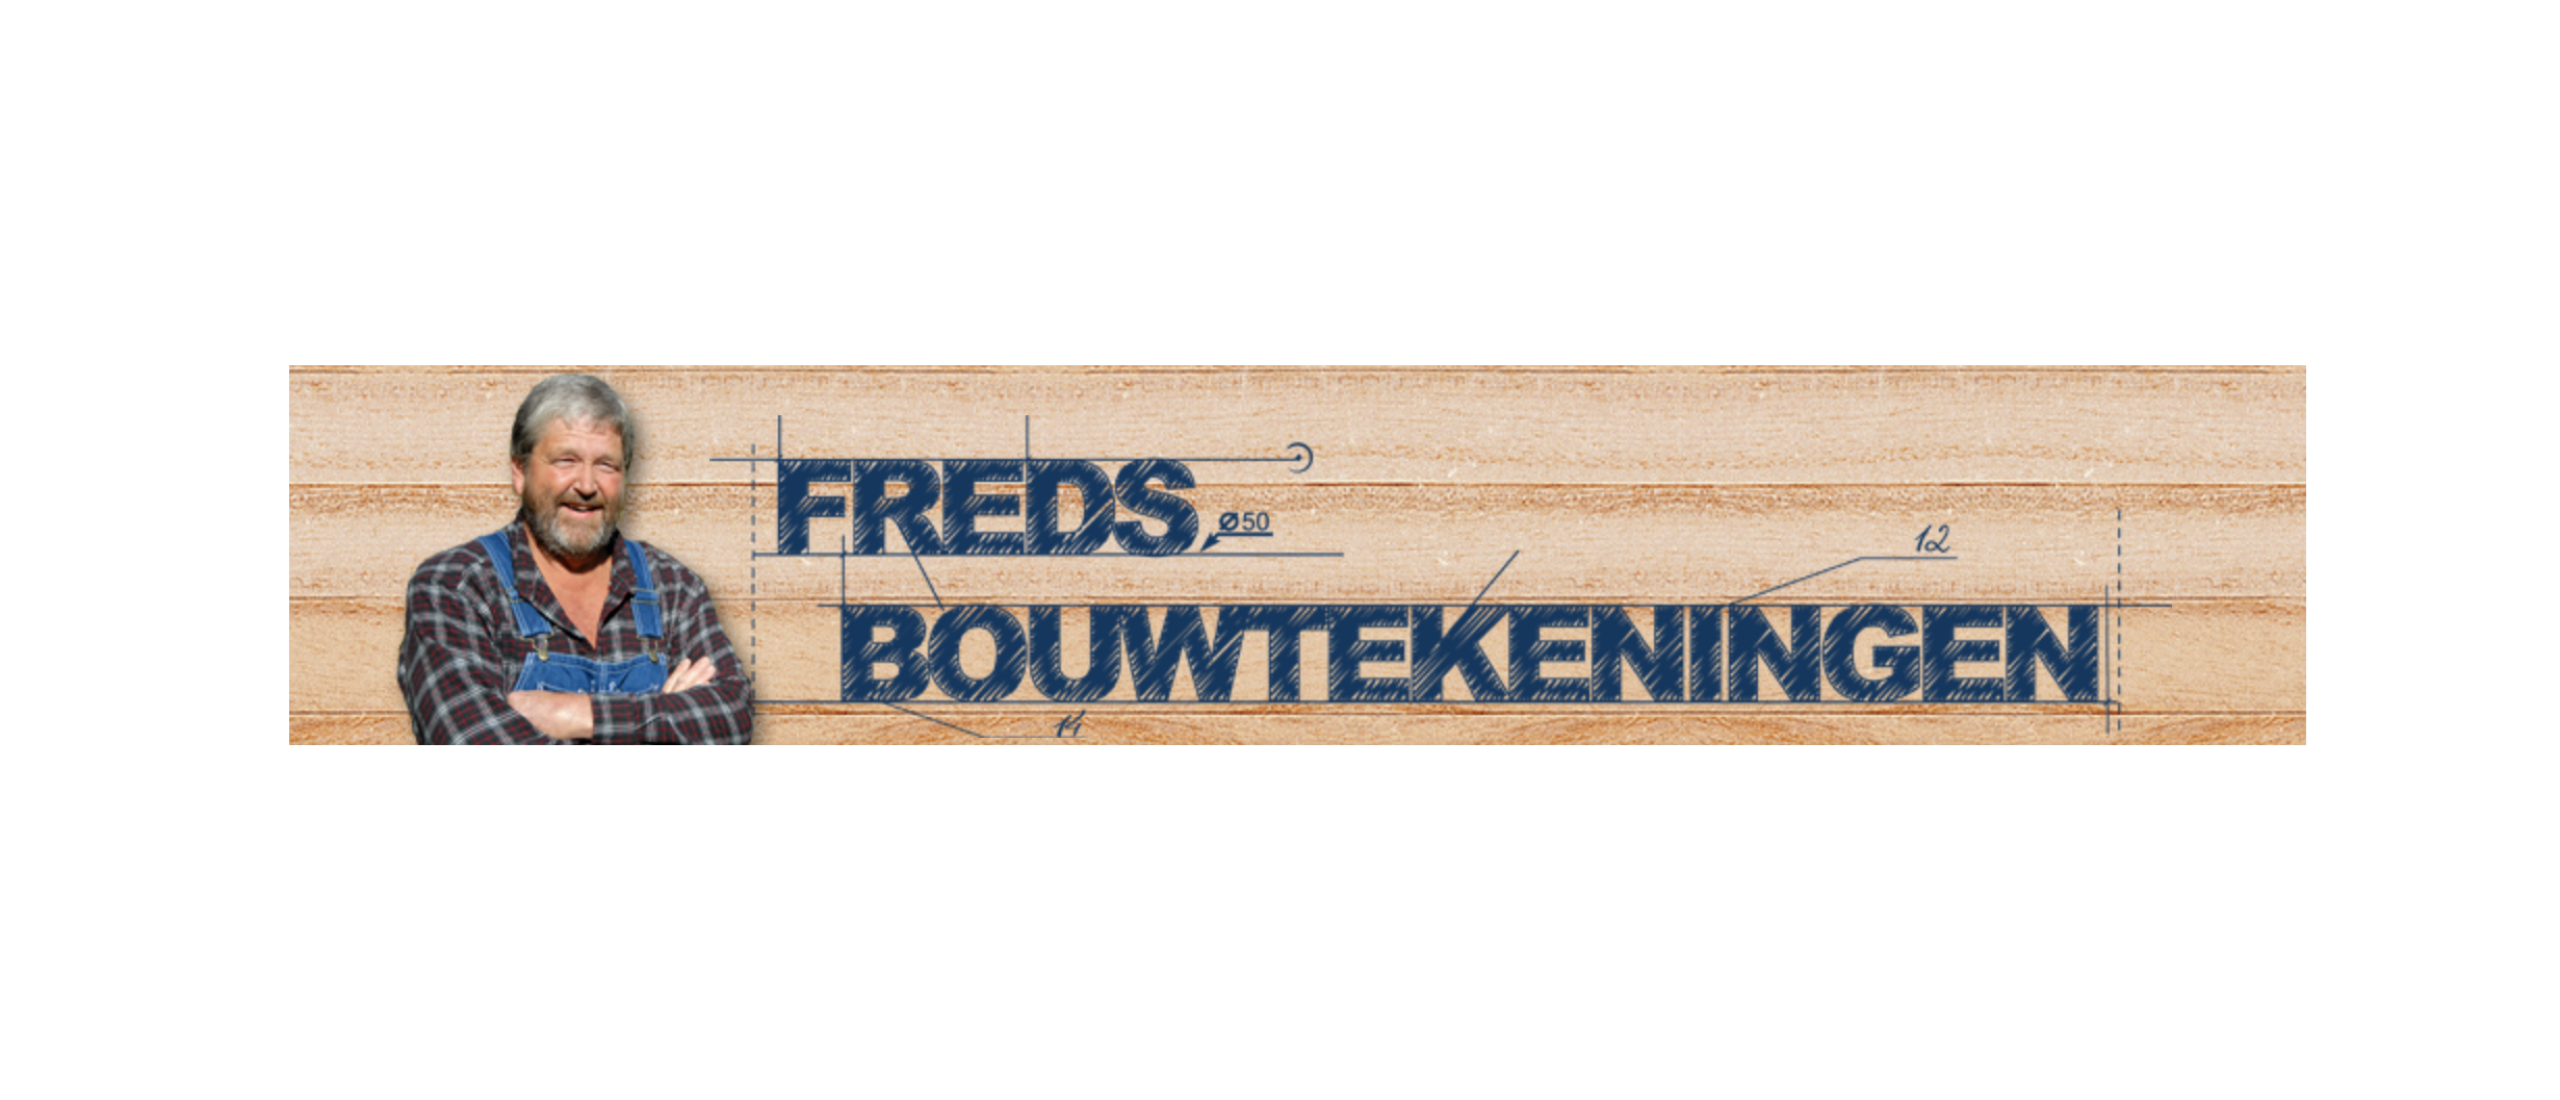 Freds Bouwtekeningen - Review